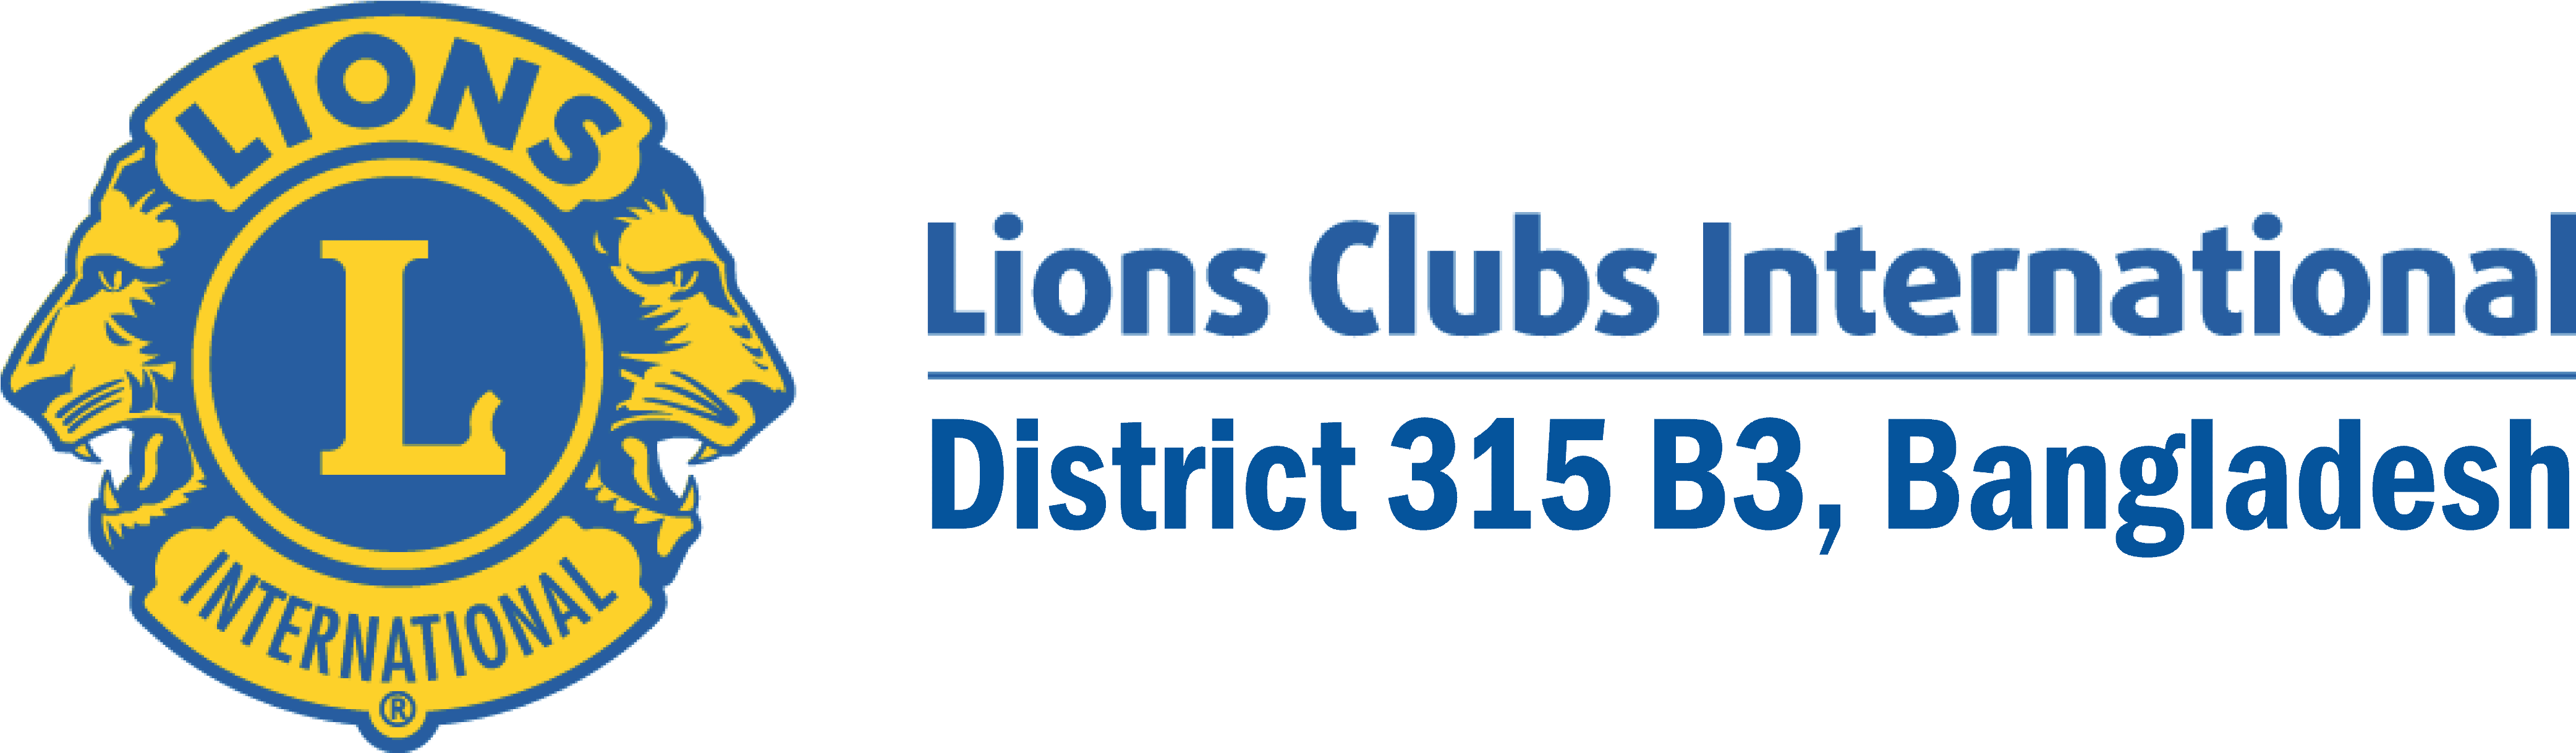 Lions Club International - Lions Club International Logo Png (4185x1240), Png Download